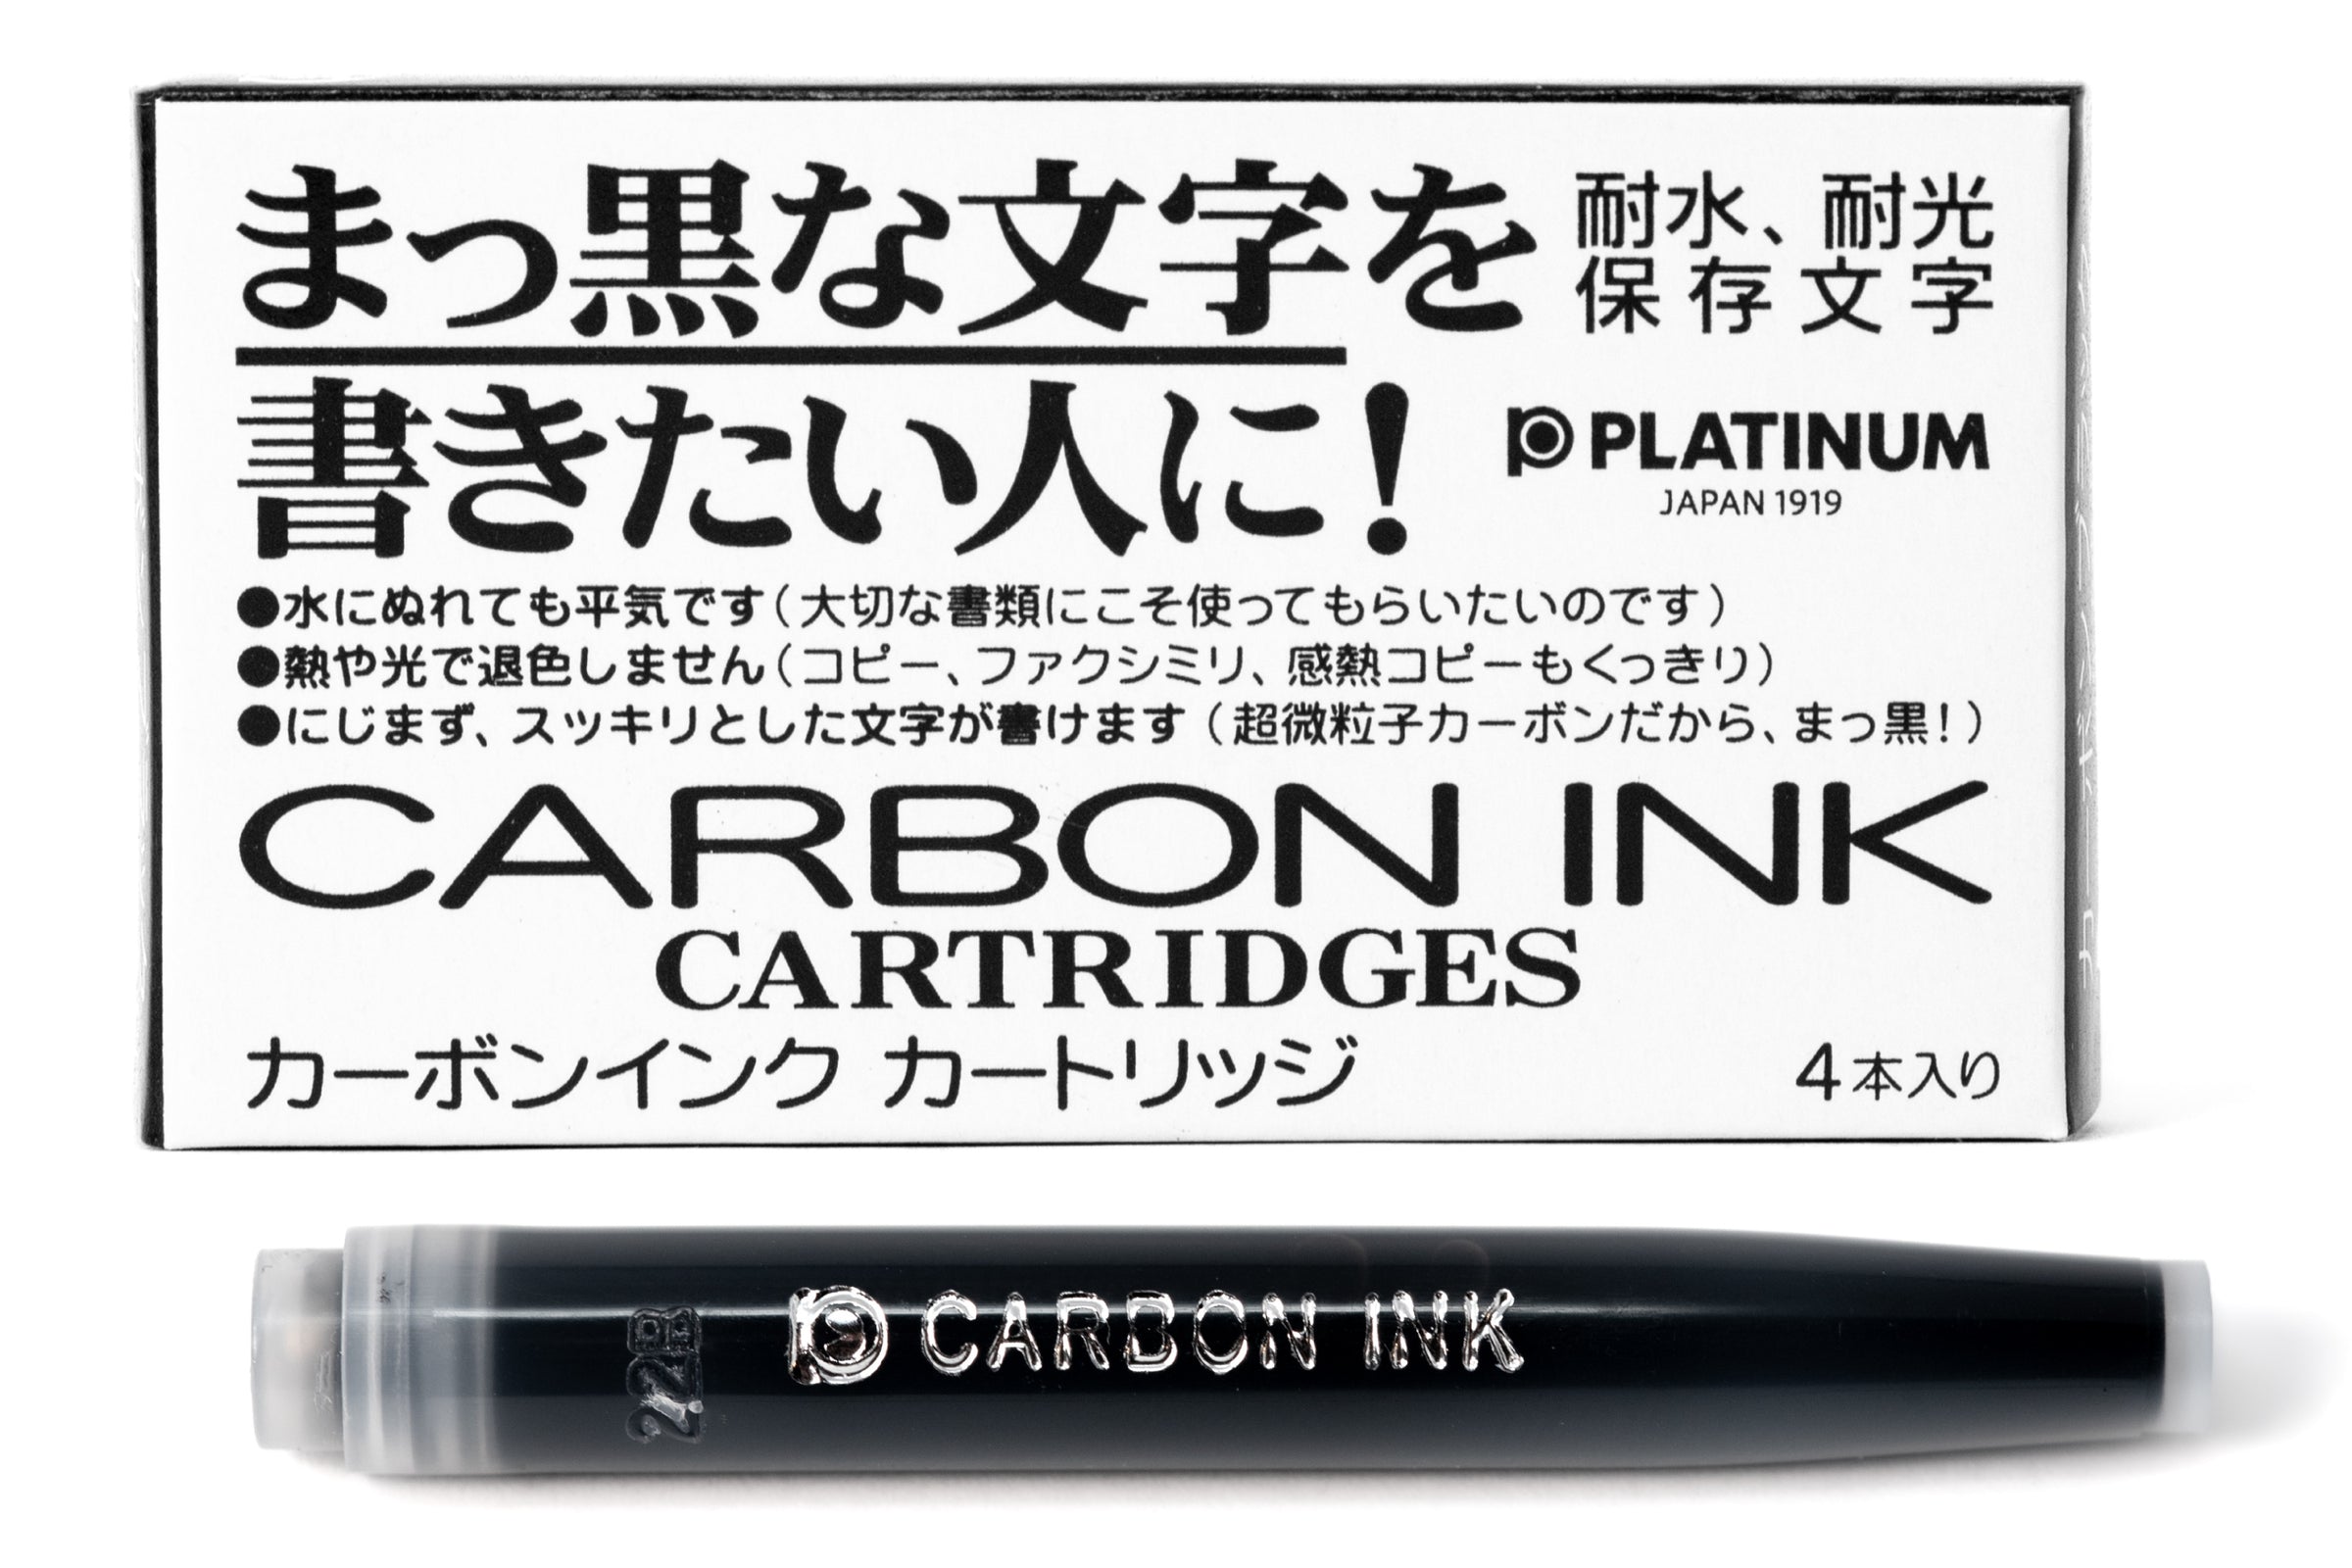 Buy Platinum Carbon ink online